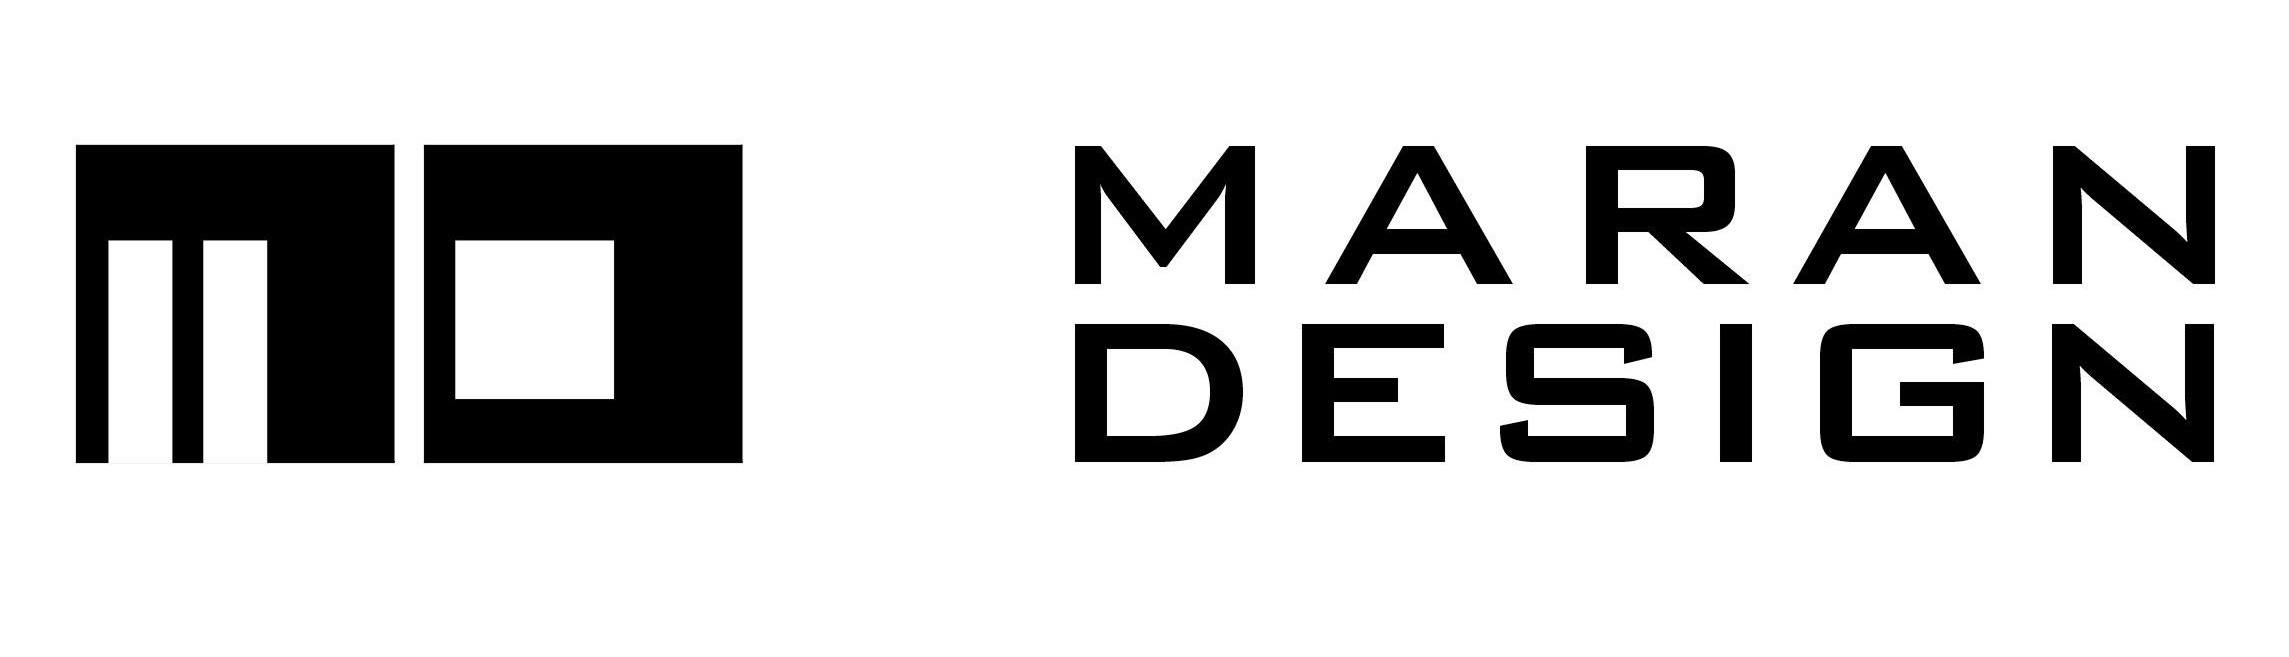 Maran Design|Architect|Professional Services